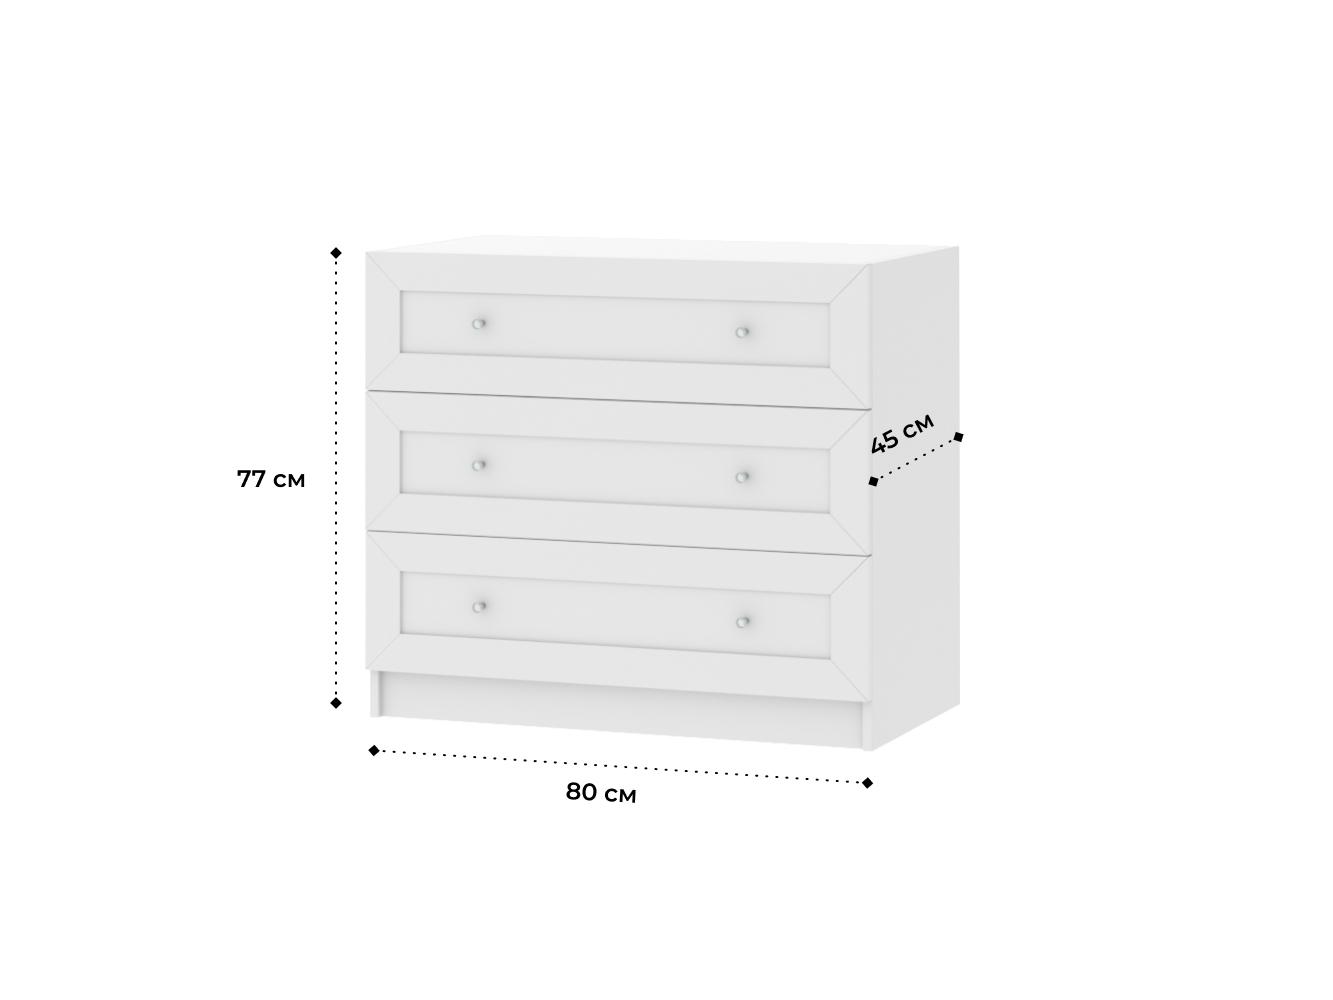 Изображение товара Комод Билли 218 white ИКЕА (IKEA), 80x45x77 см на сайте adeta.ru